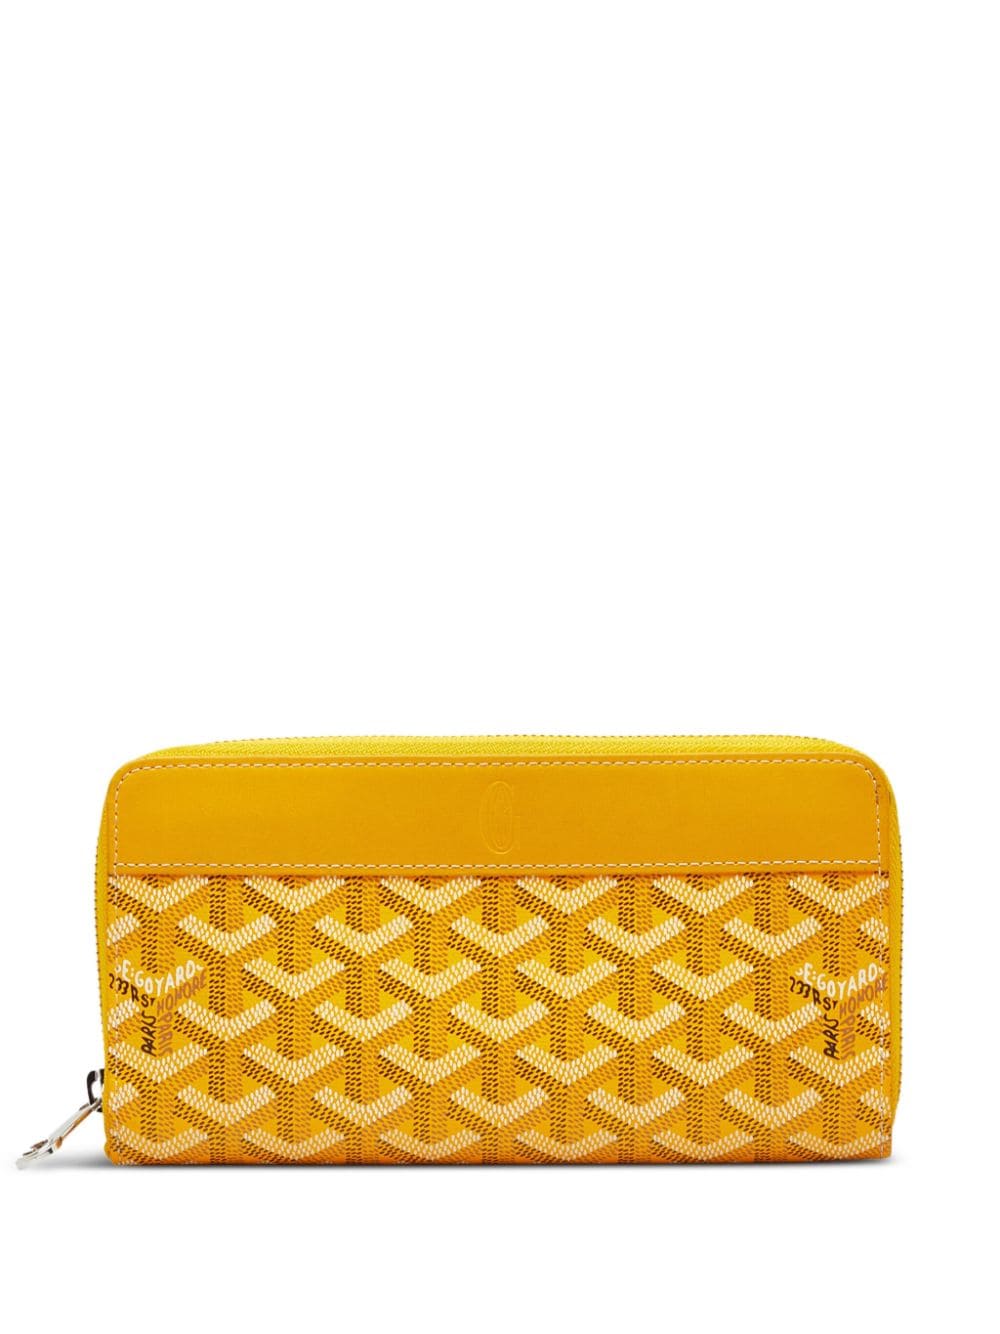 GOYARD Paris Orange Canvas Shoulder Tote Bag With Matching Wallet